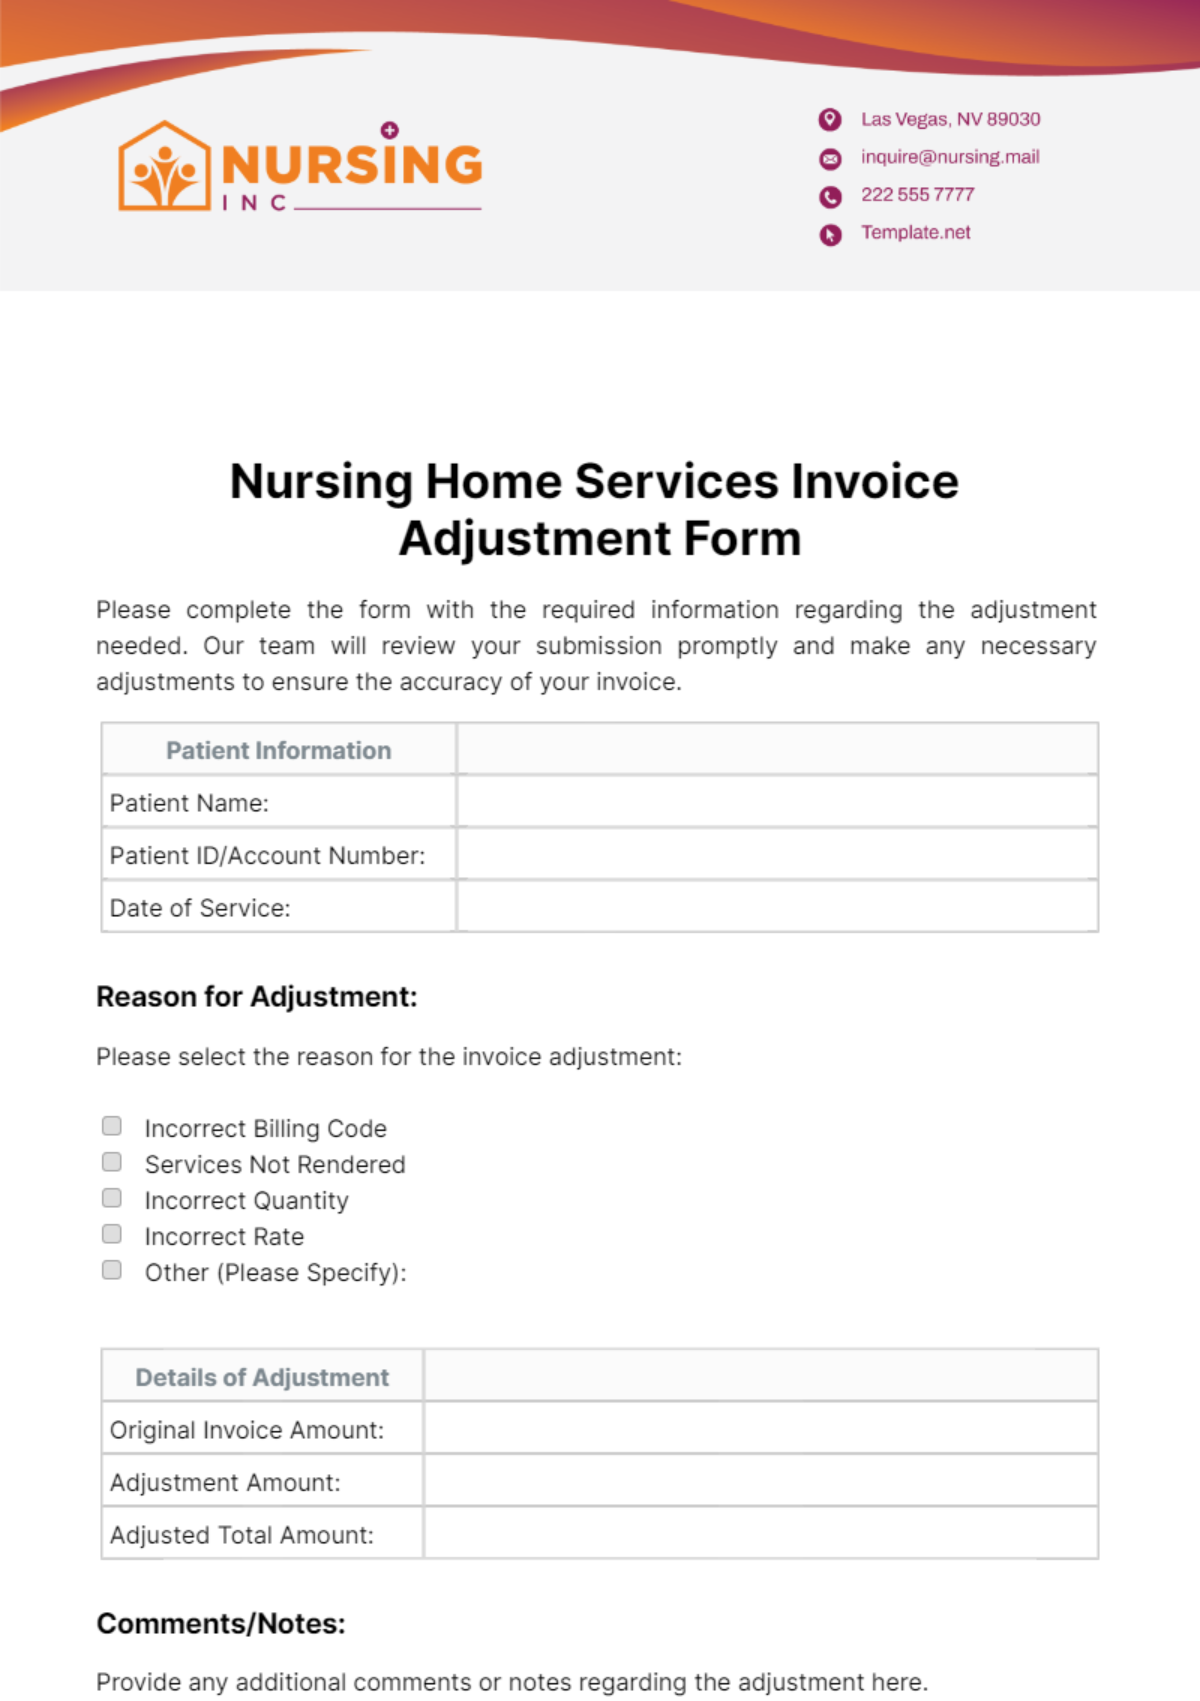 Nursing Home Services Invoice Adjustment Form Template